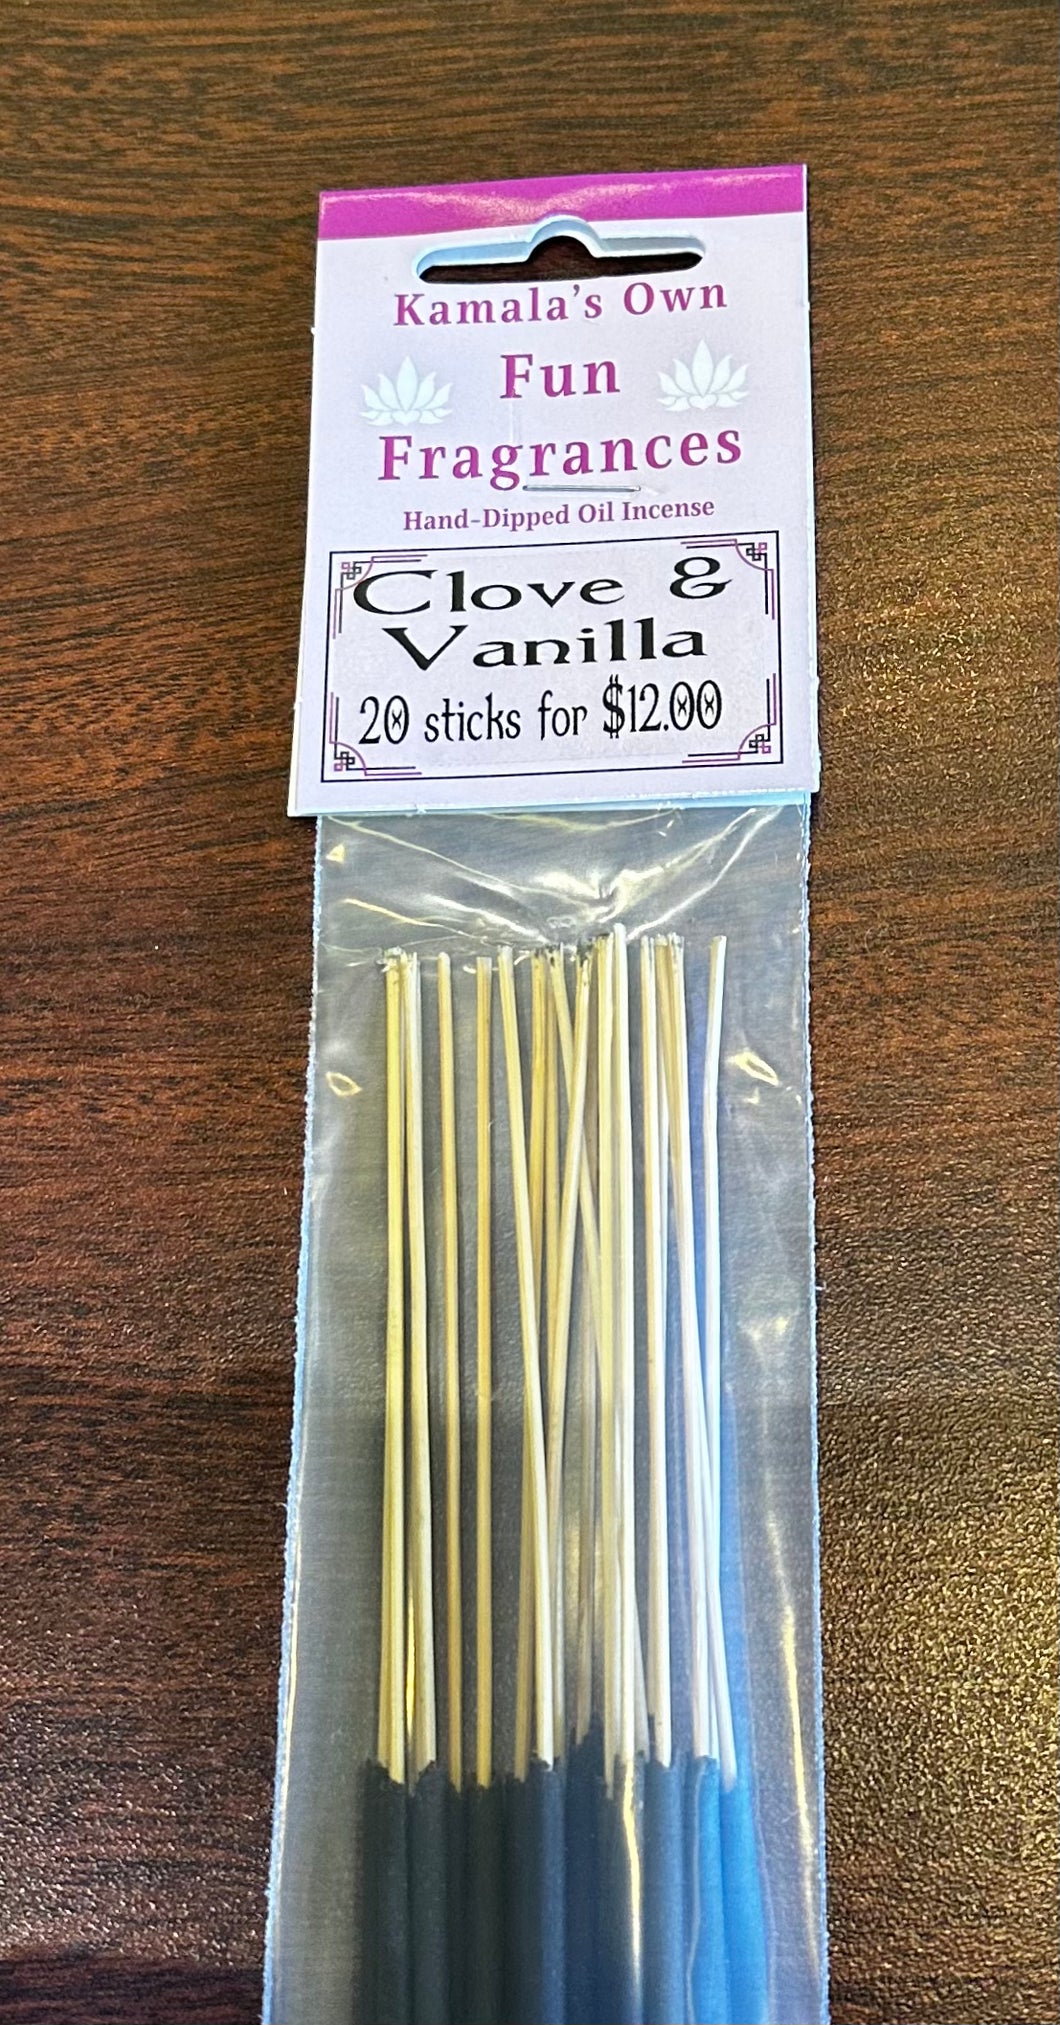 Clove & Vanilla stick incense